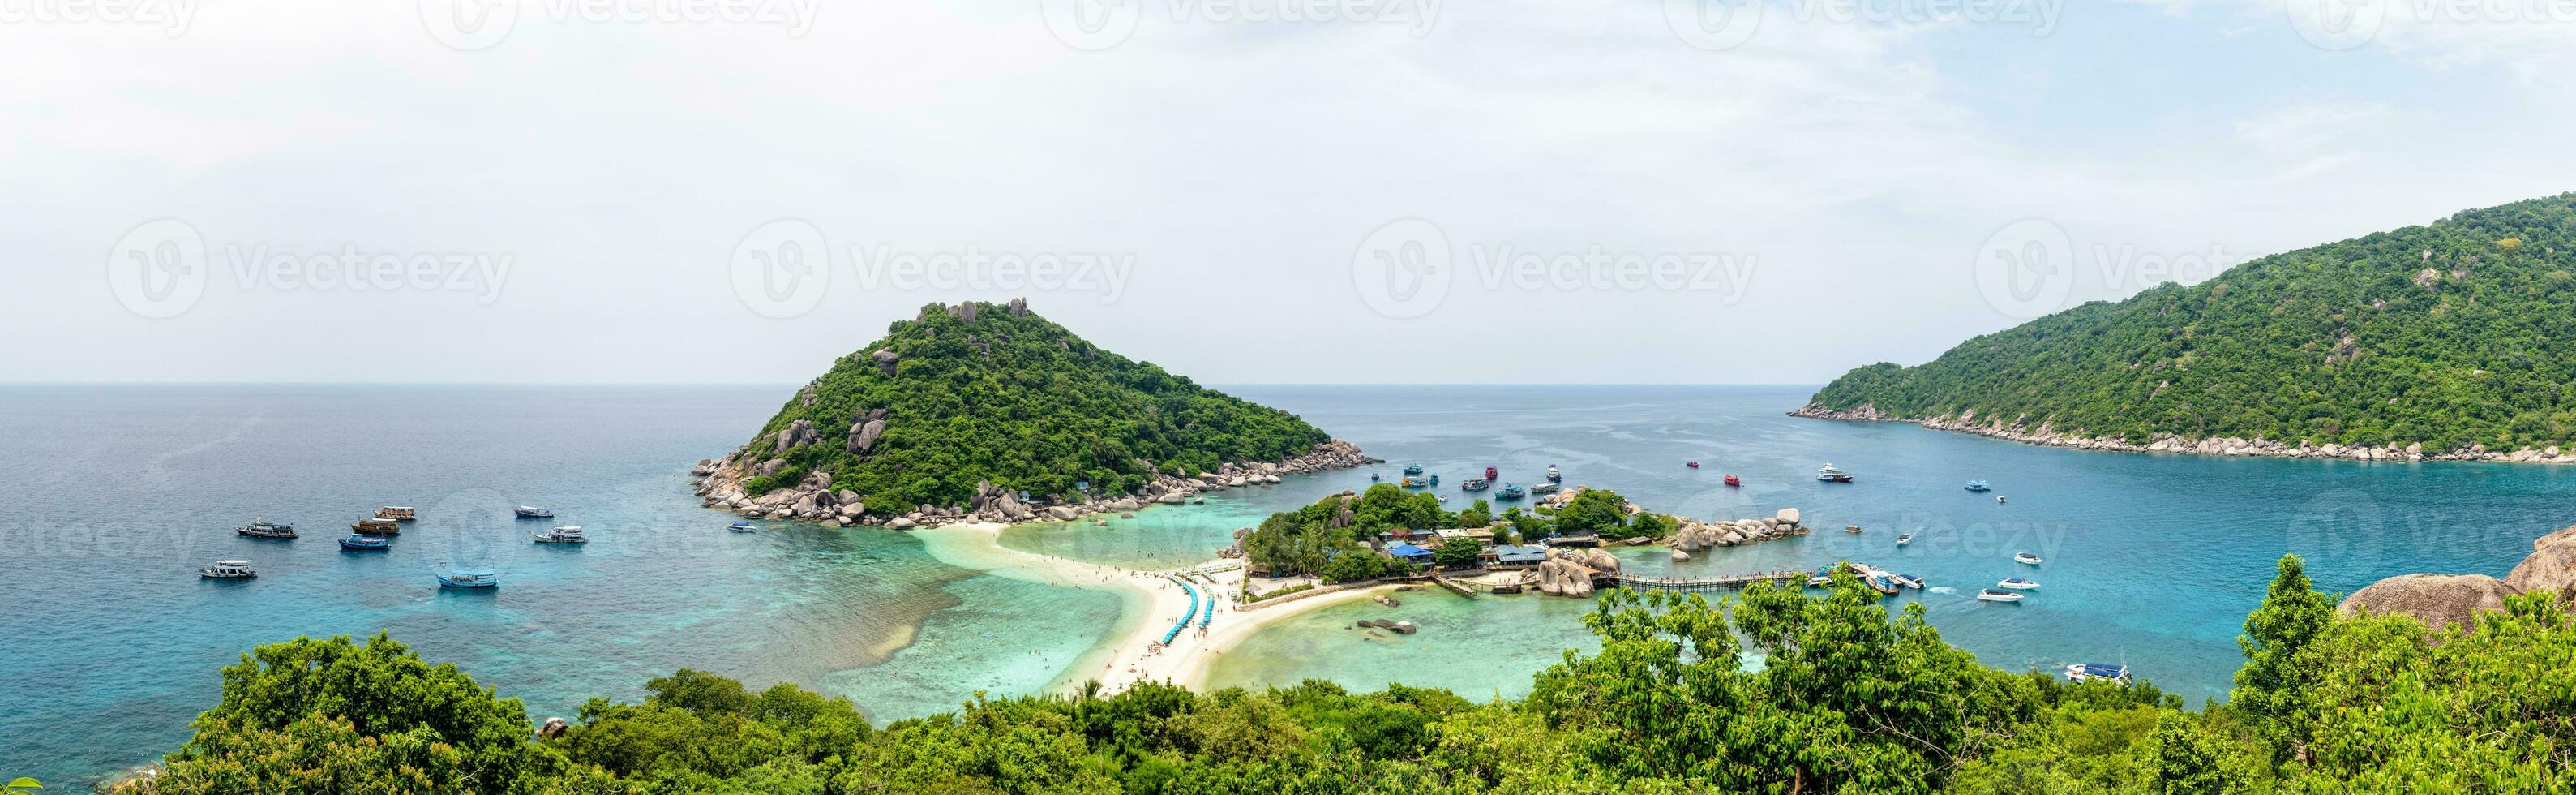 panorama koh nang yuan isla foto